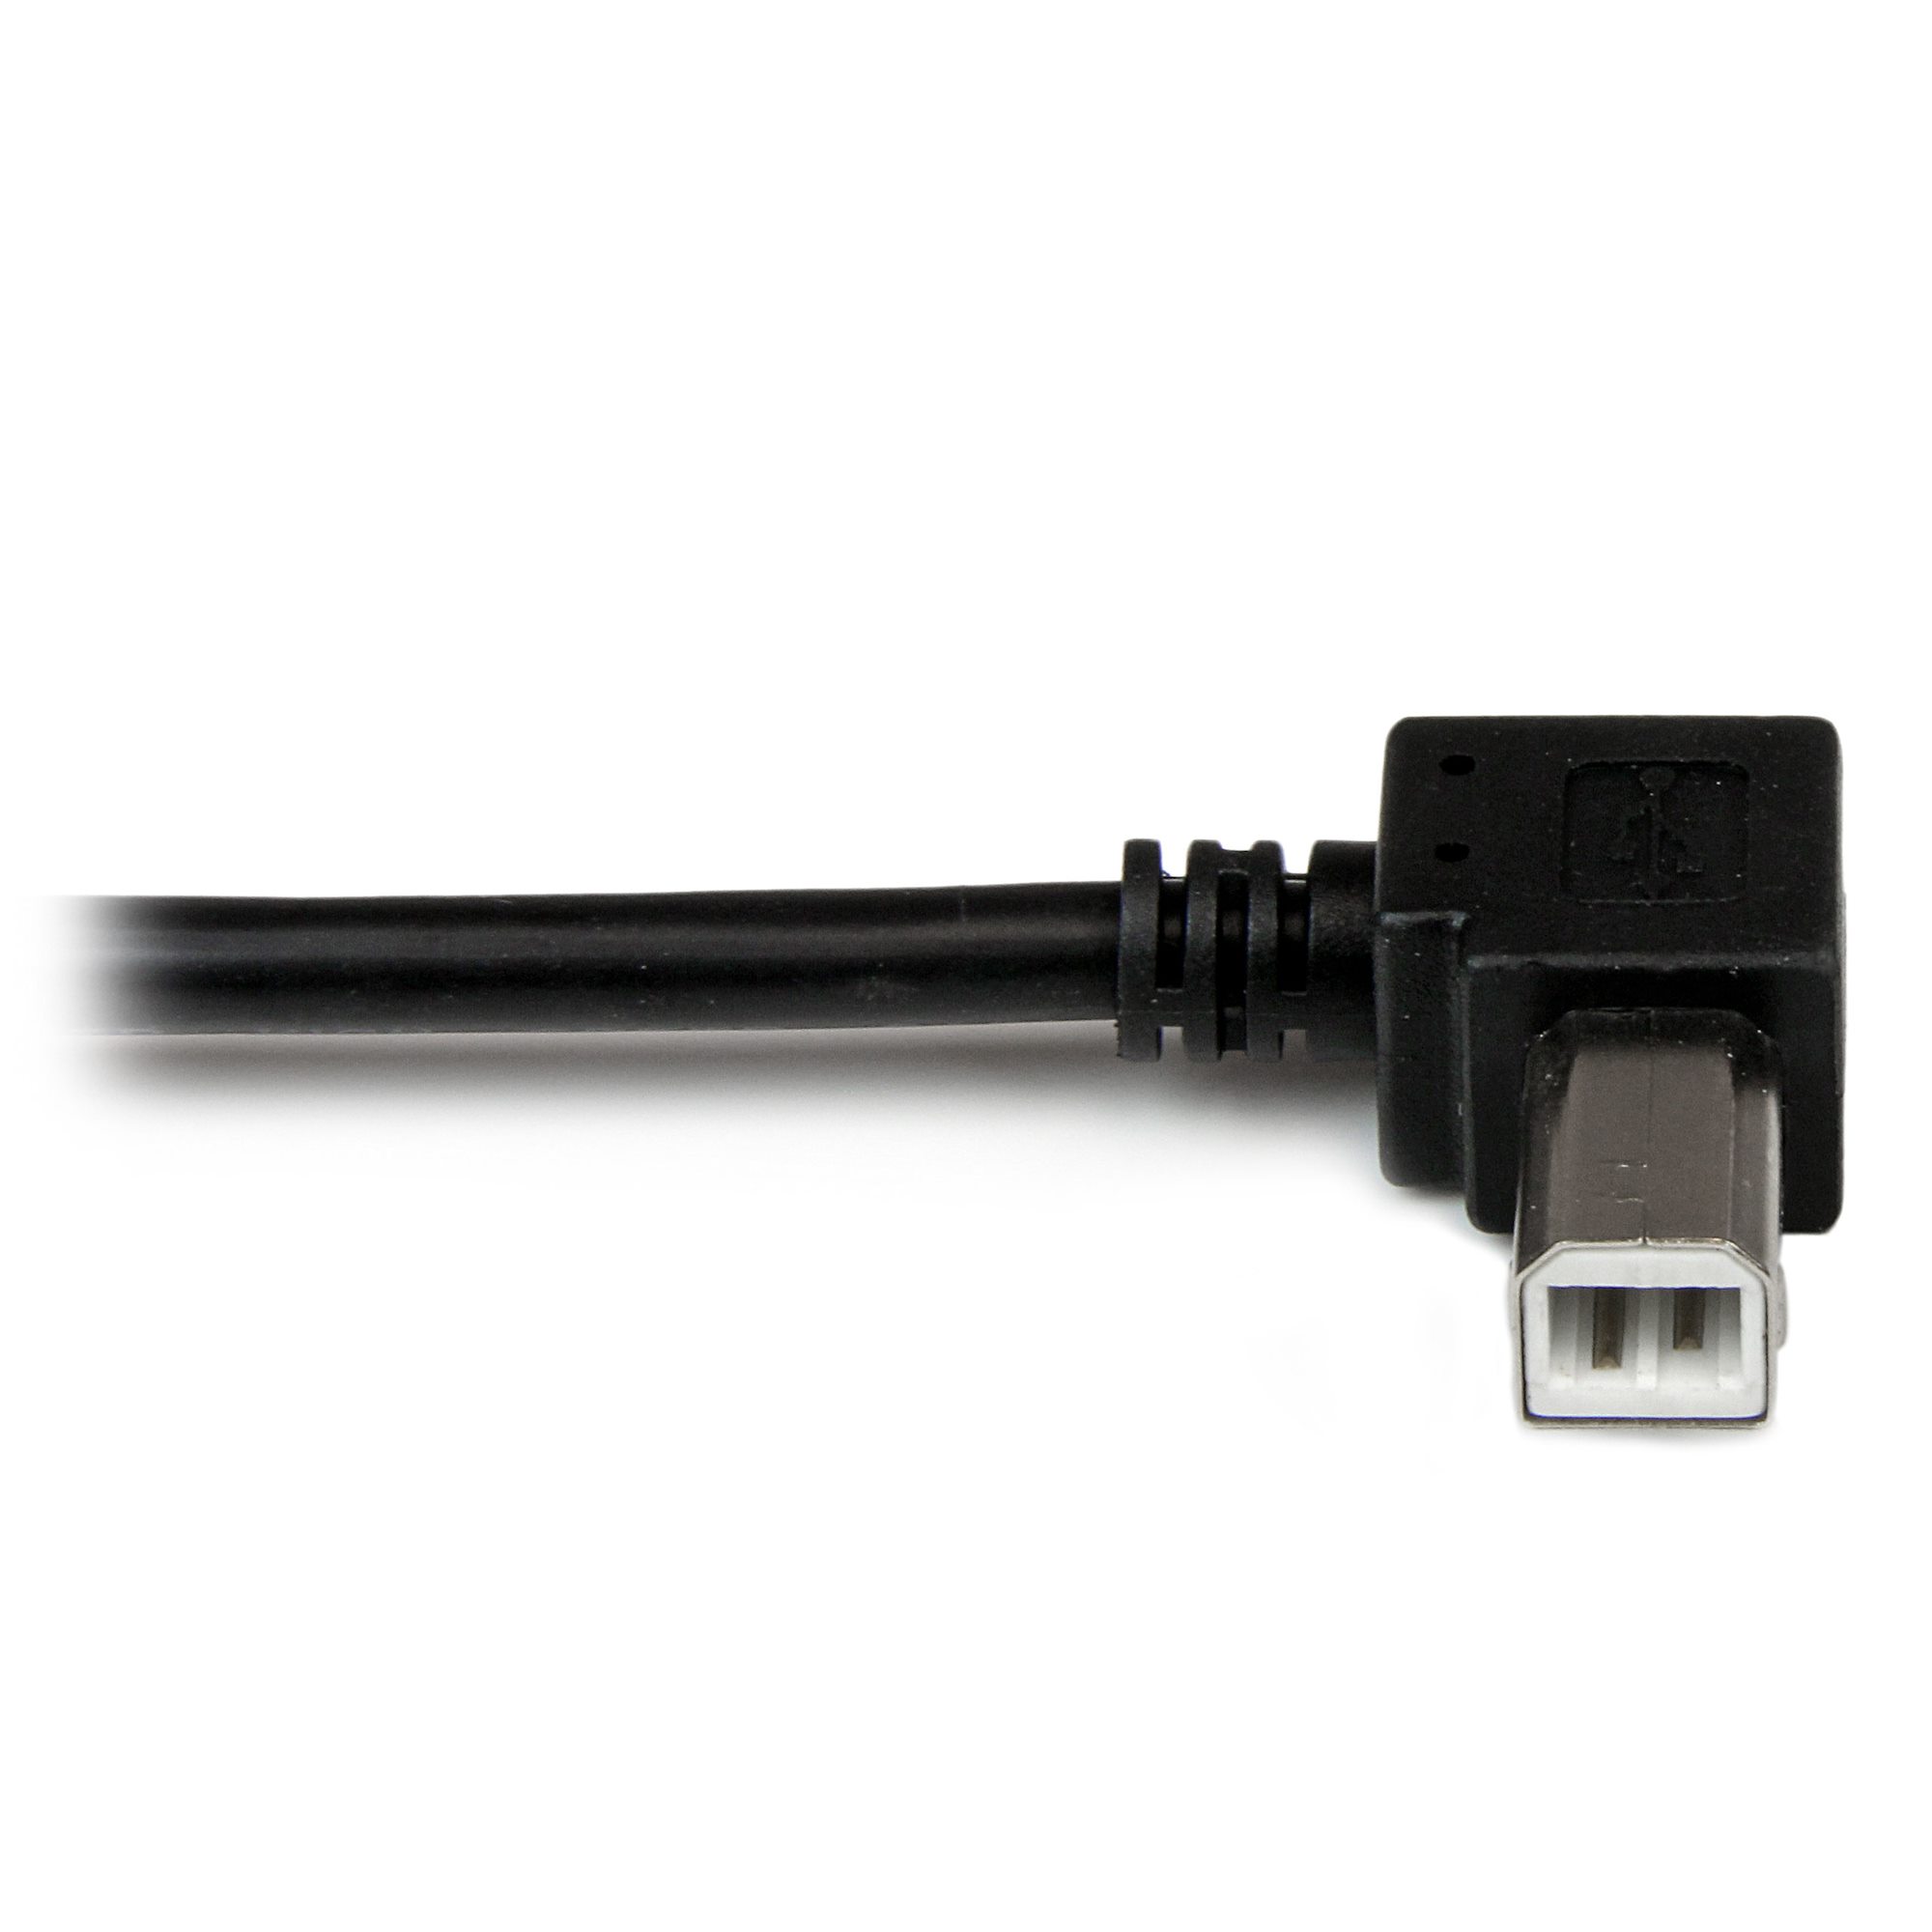 StarTech.com 0.5m White Micro USB Cable Cord - A to Micro B - Micro USB  Charging Data Cable - USB 2.0 - 1x USB A Male, 1x USB Micro B Male